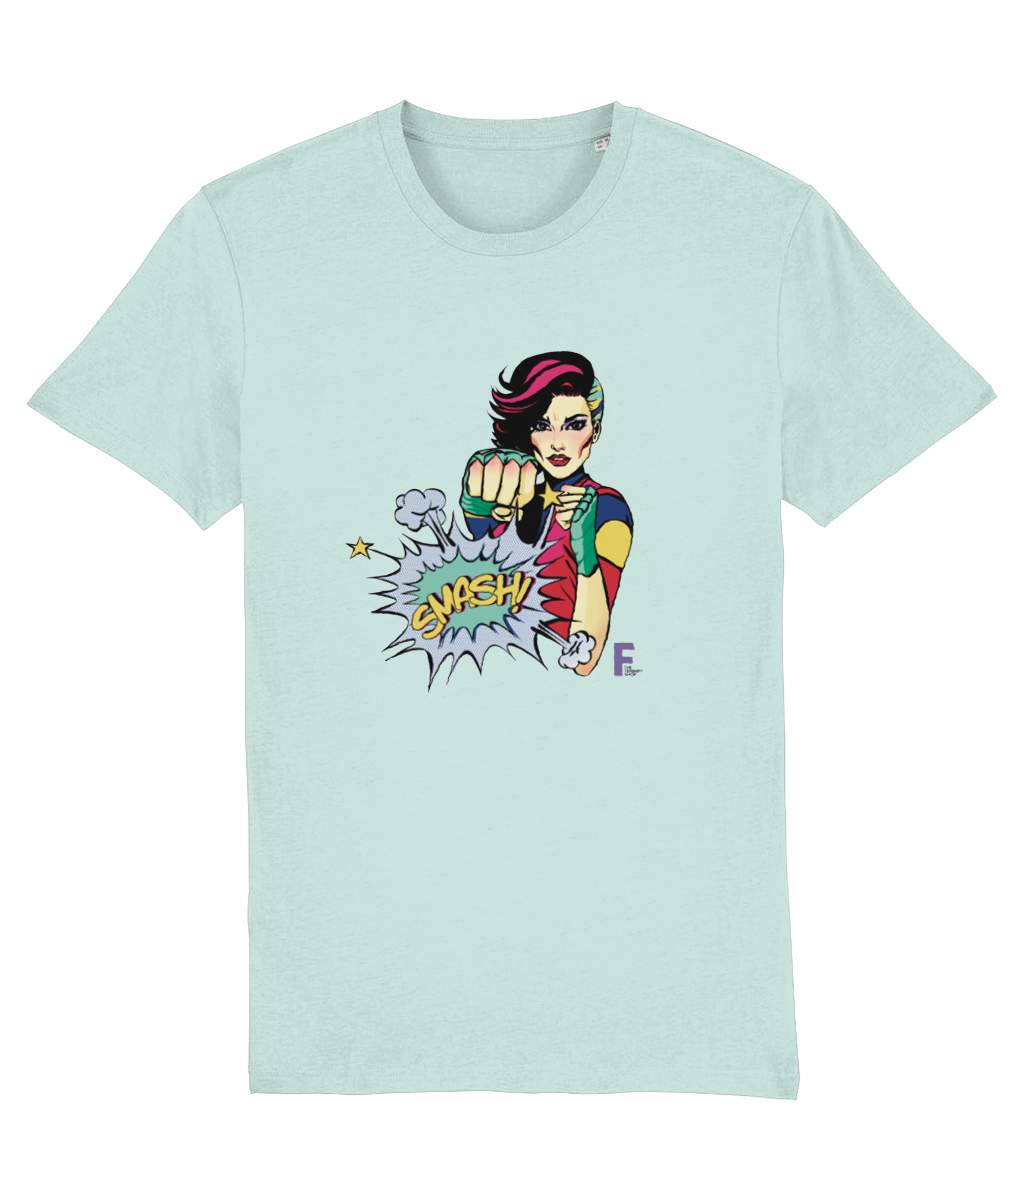 Unisex Organic Feminist T Shirt - Smash it